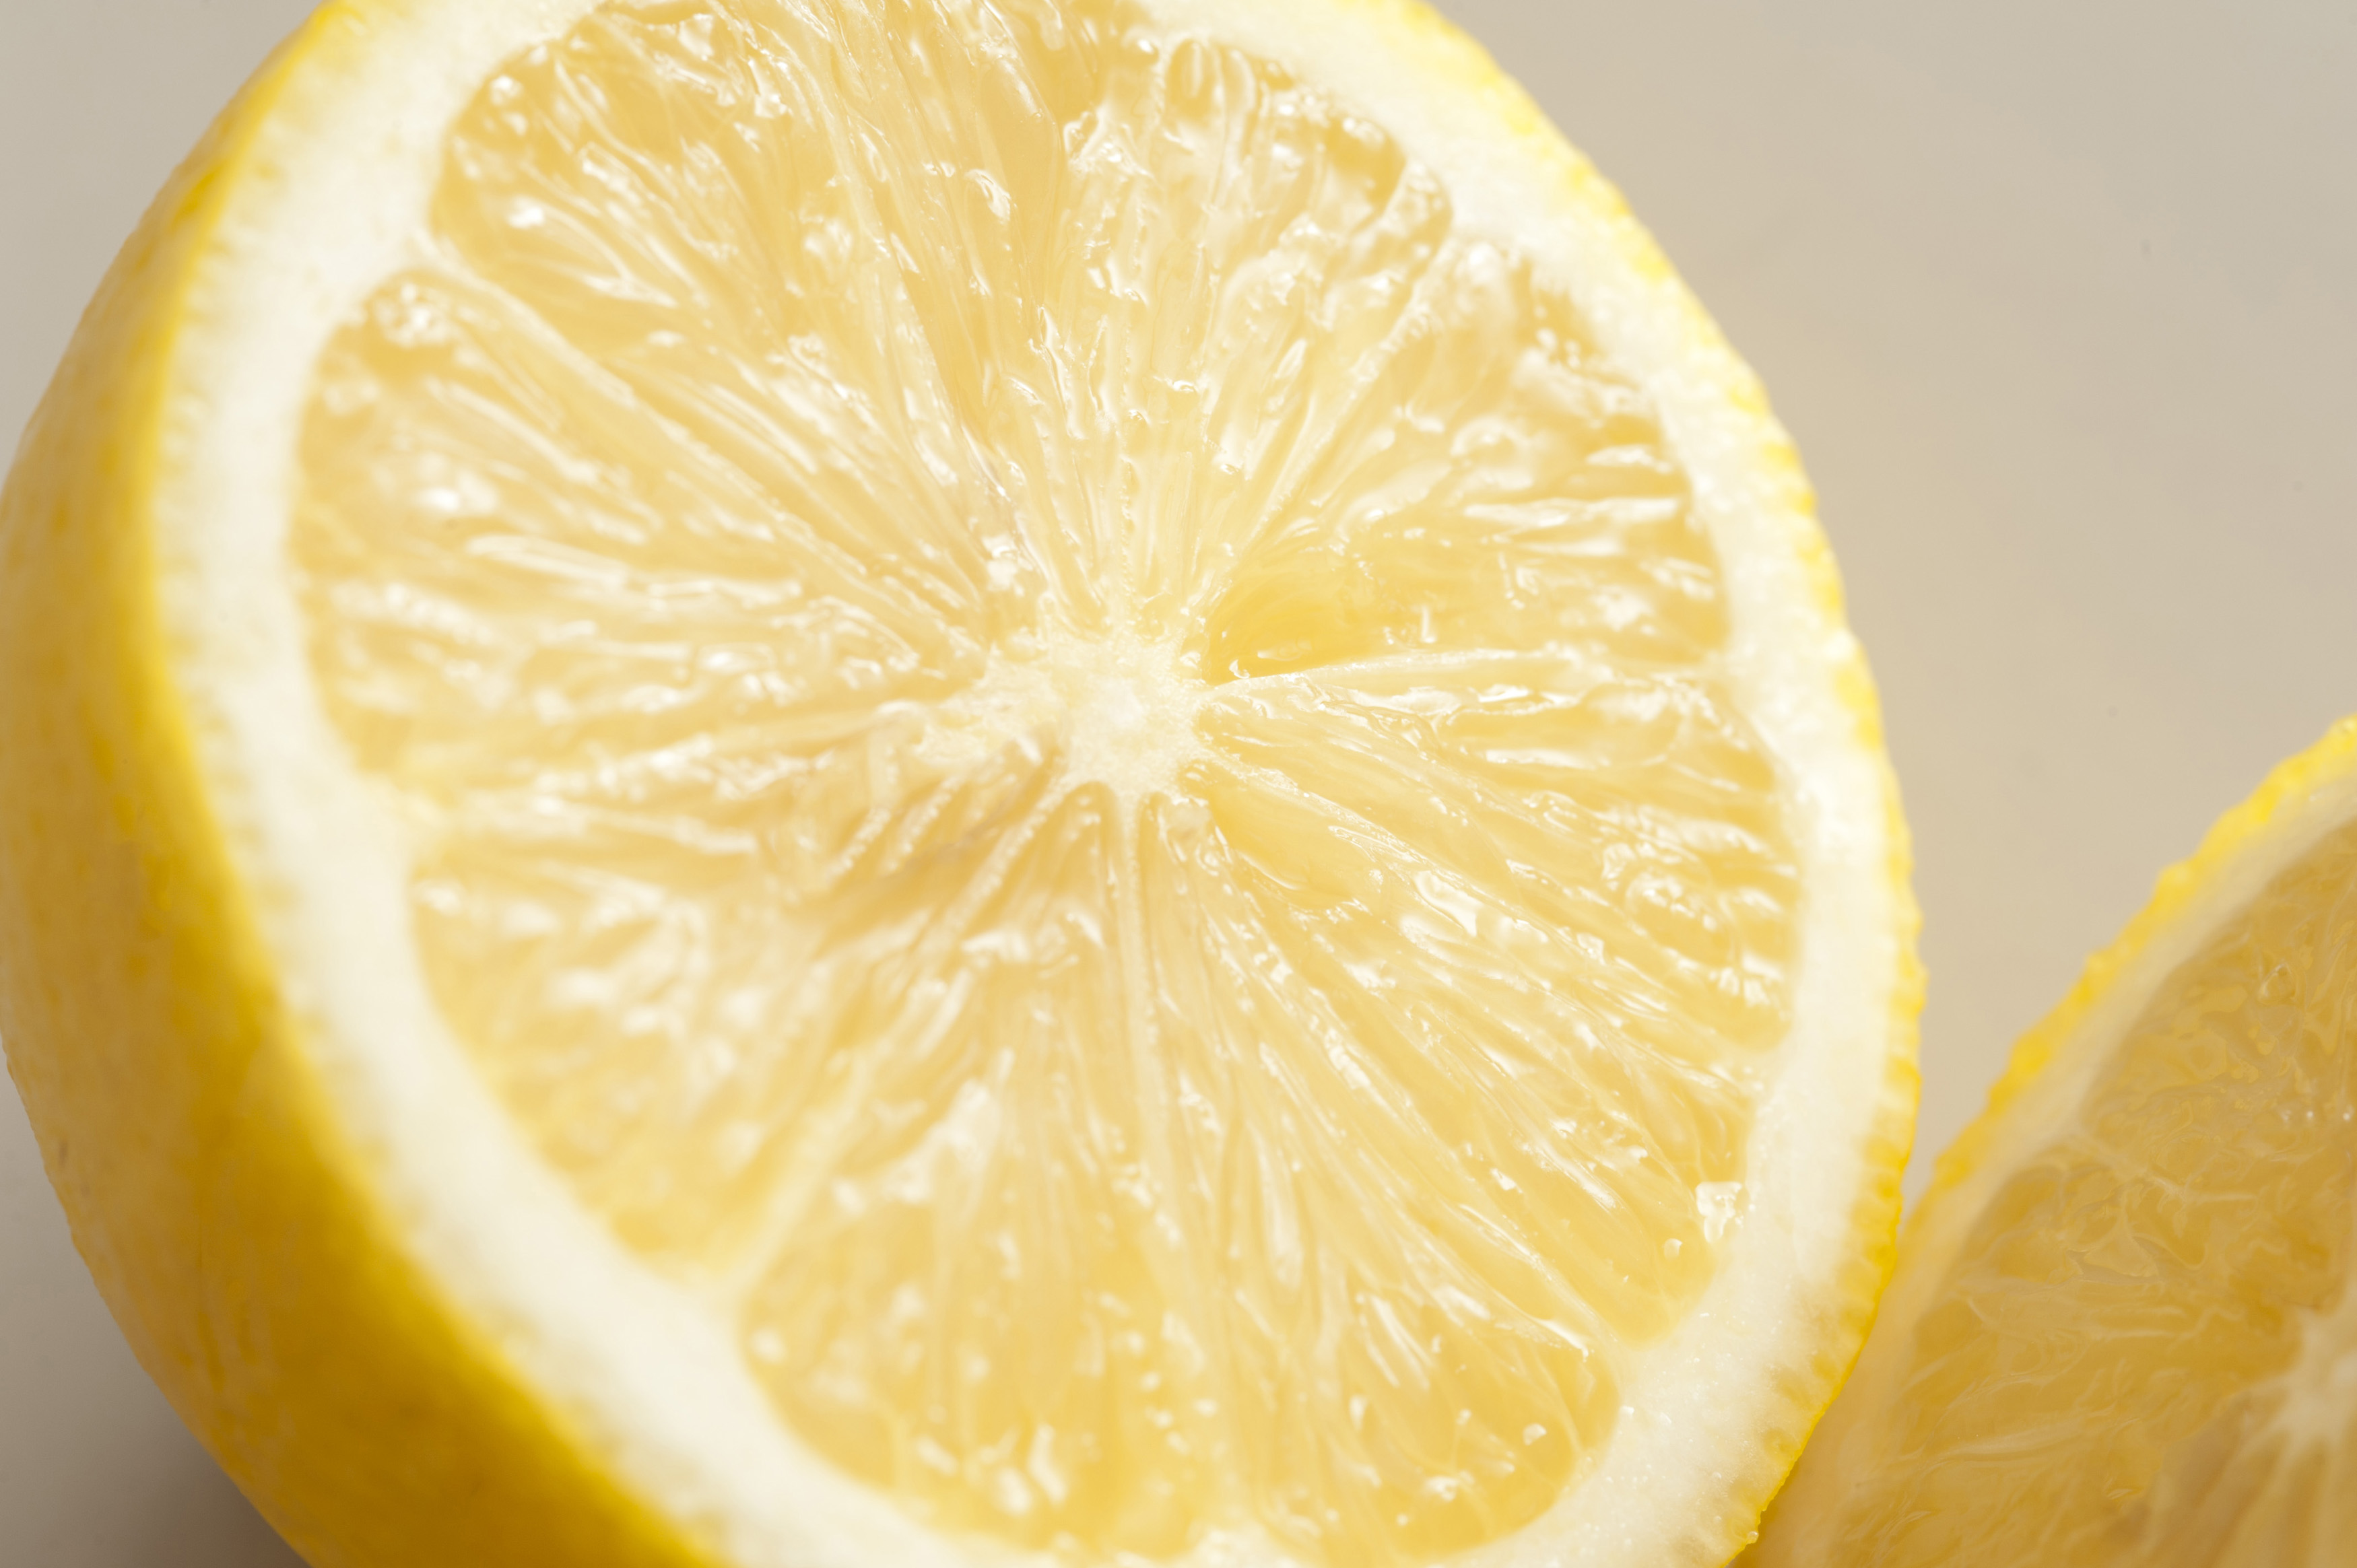 Close-up of cut lemon - Free Stock Image